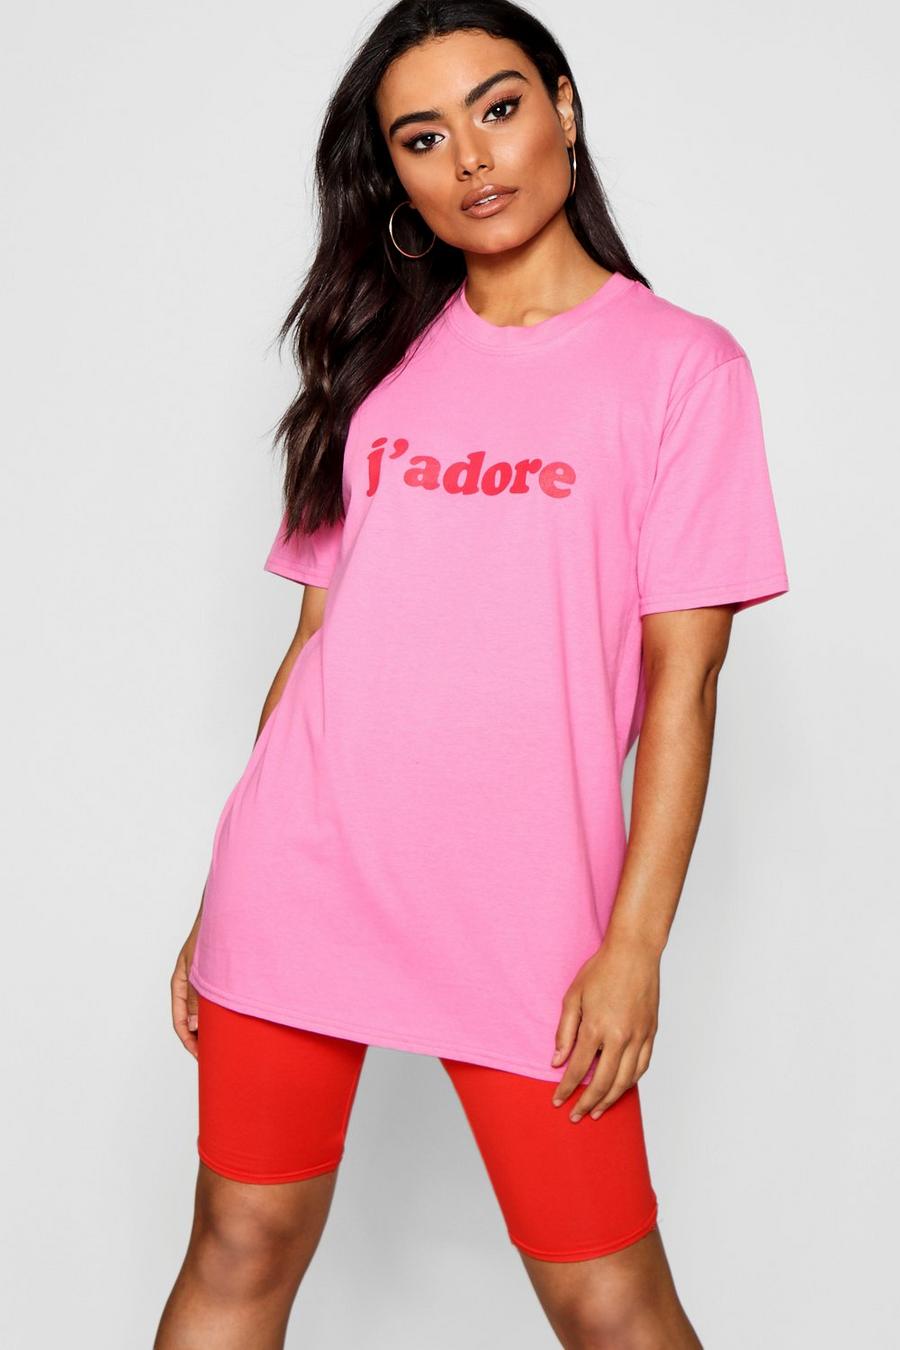 J'adore Slogan T-Shirt, Pink image number 1